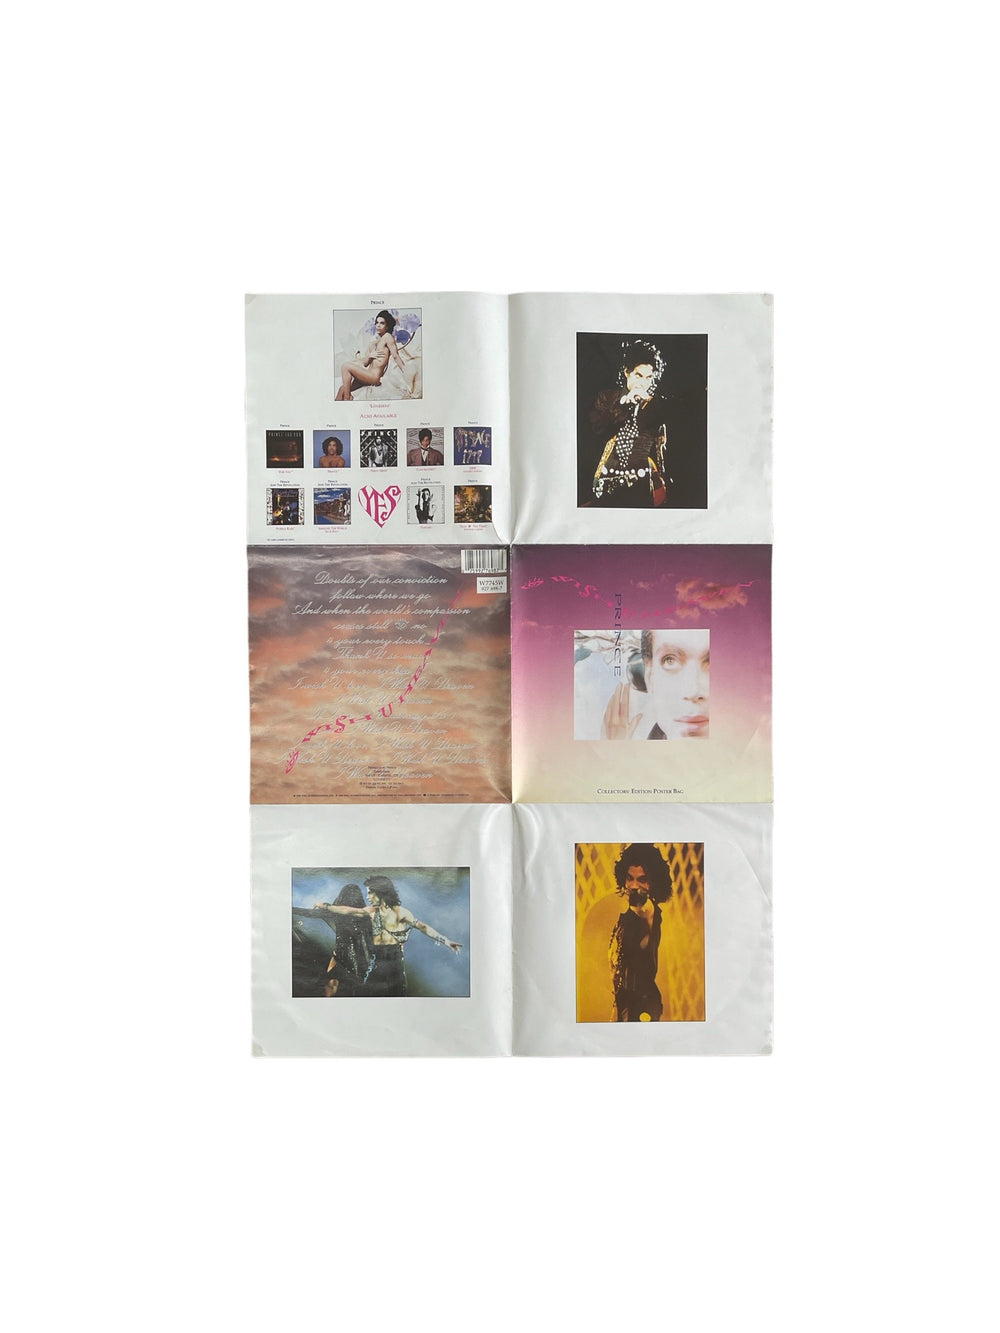 Prince – Eye Wish U Heaven Vinyl 7" Single Poster Bag  Preloved UK Released: 1988